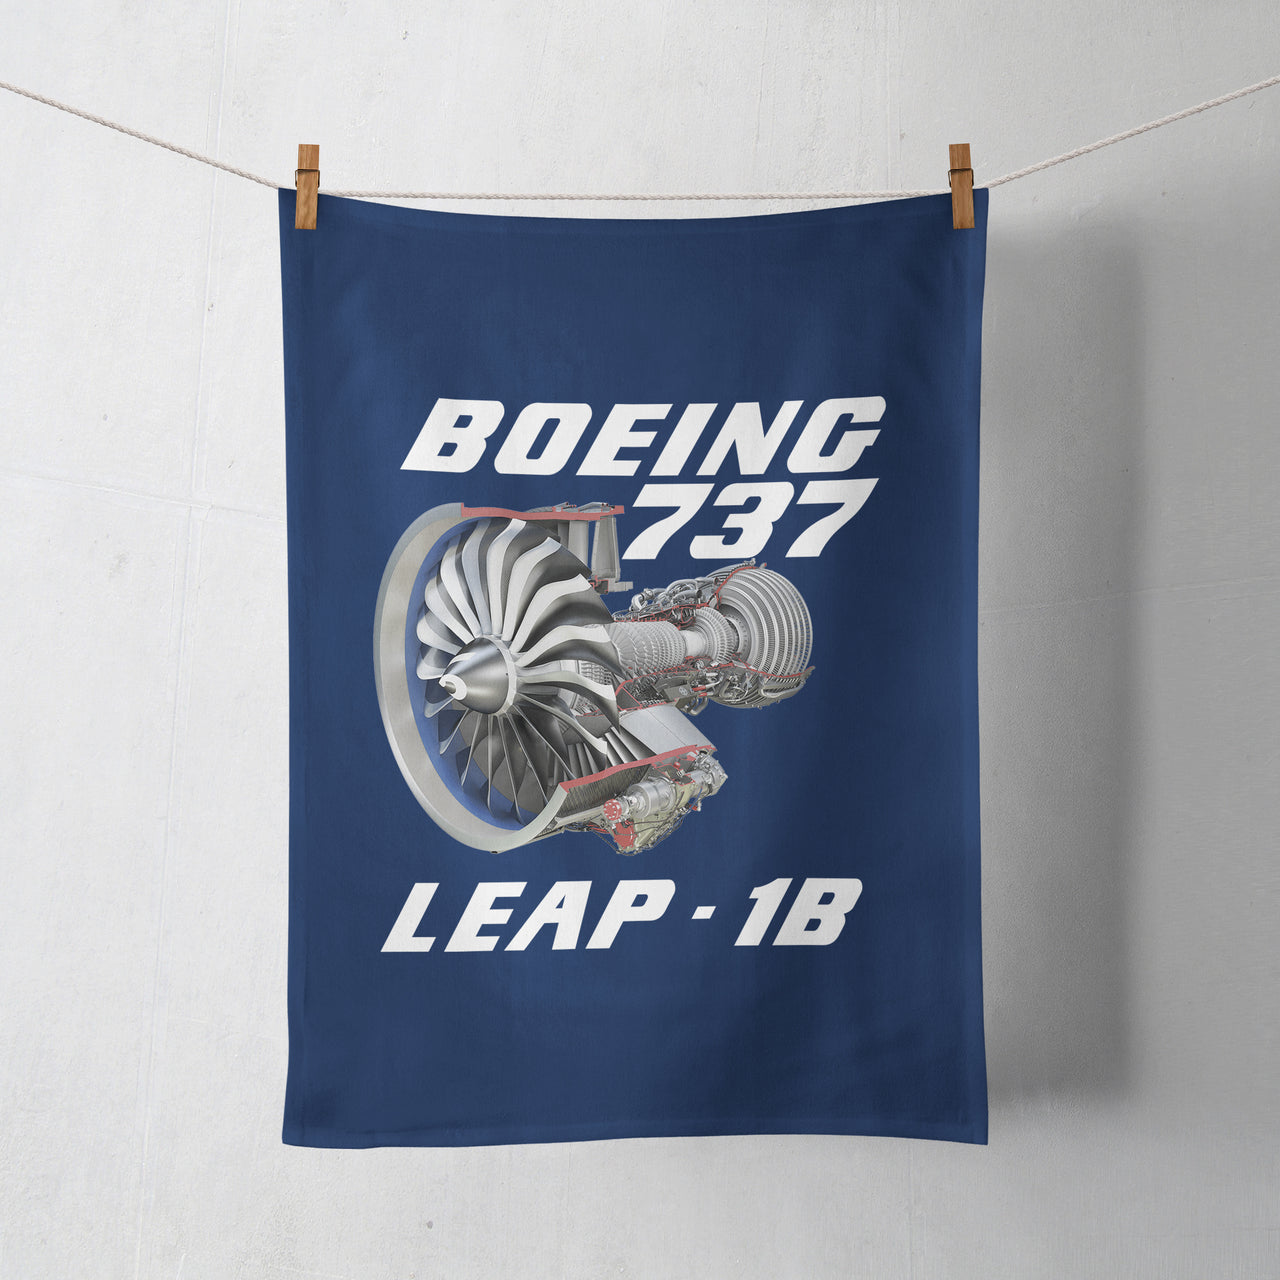 Boeing 737 & Leap 1B Designed Towels